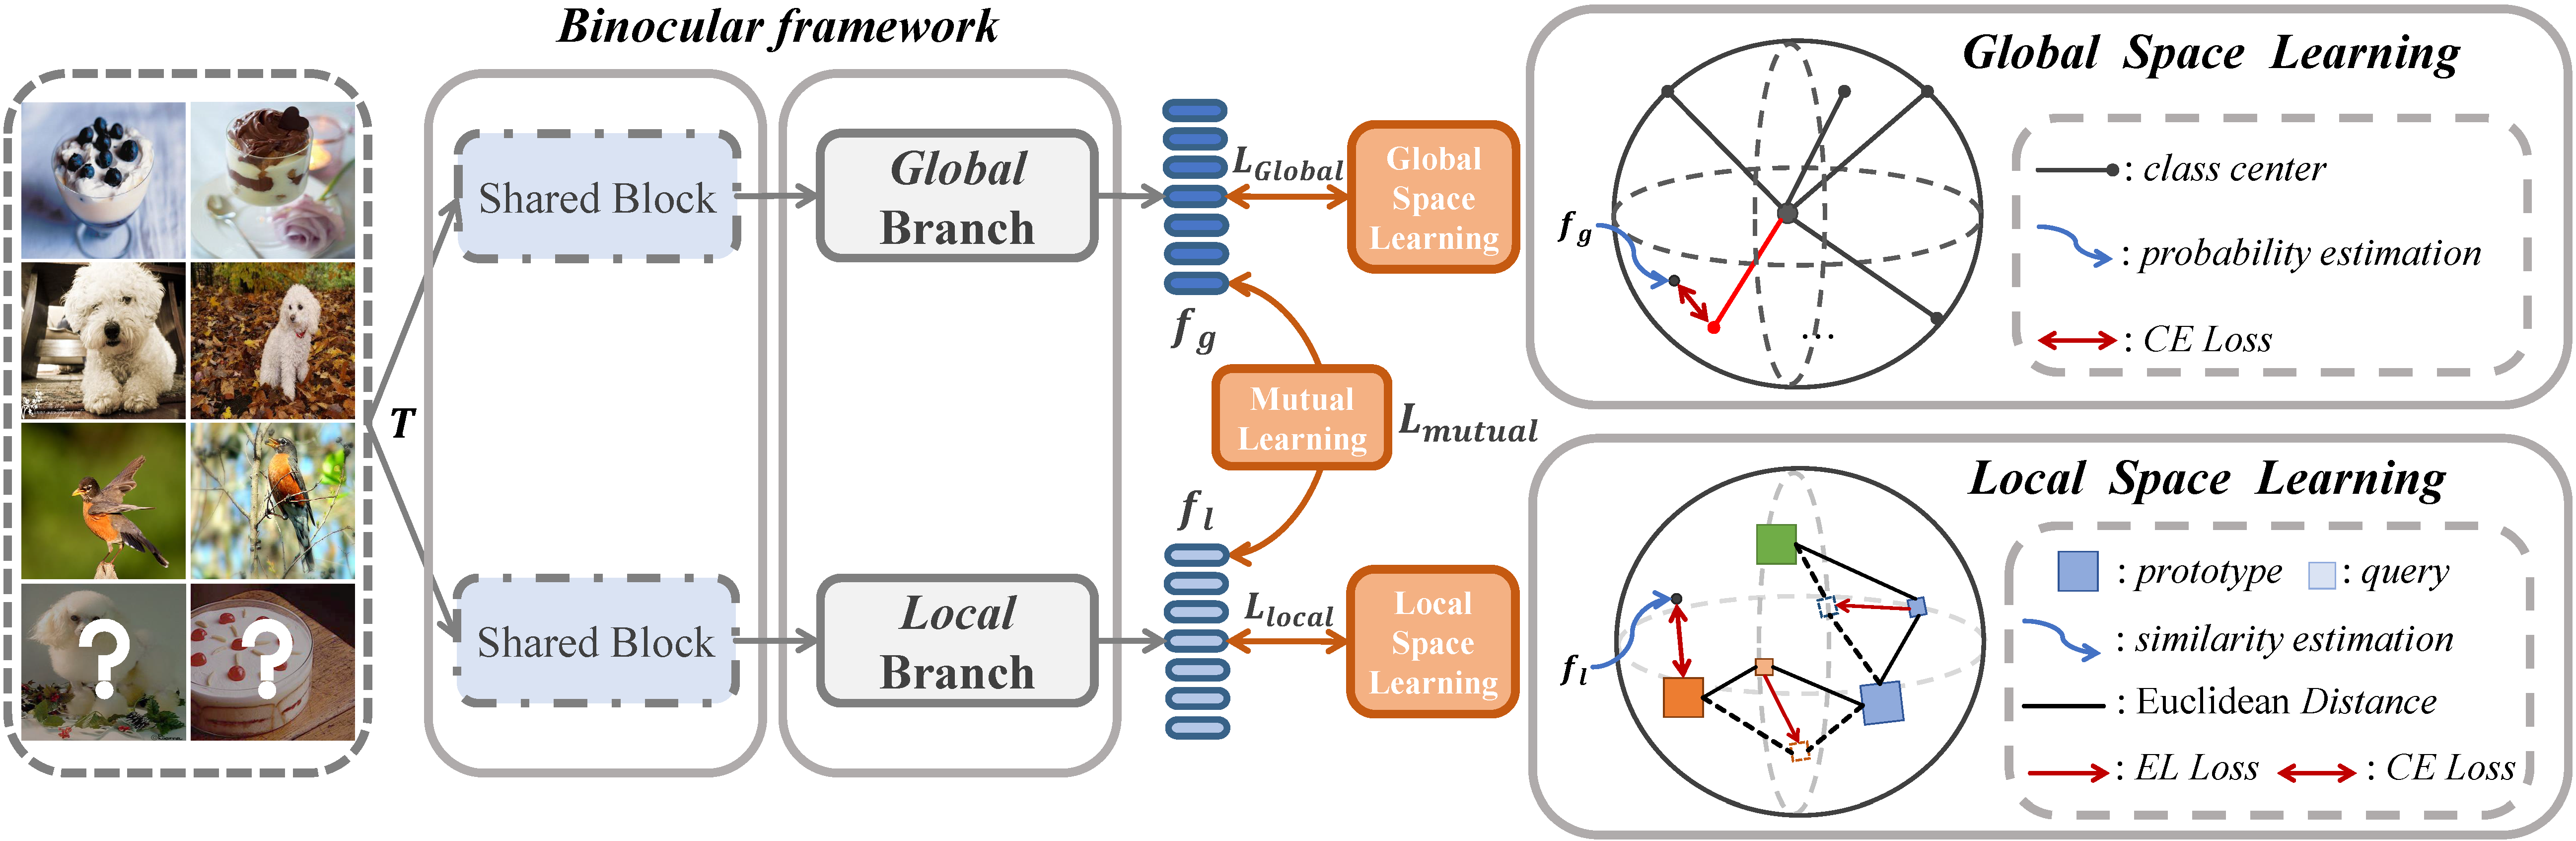 BML framework diagram